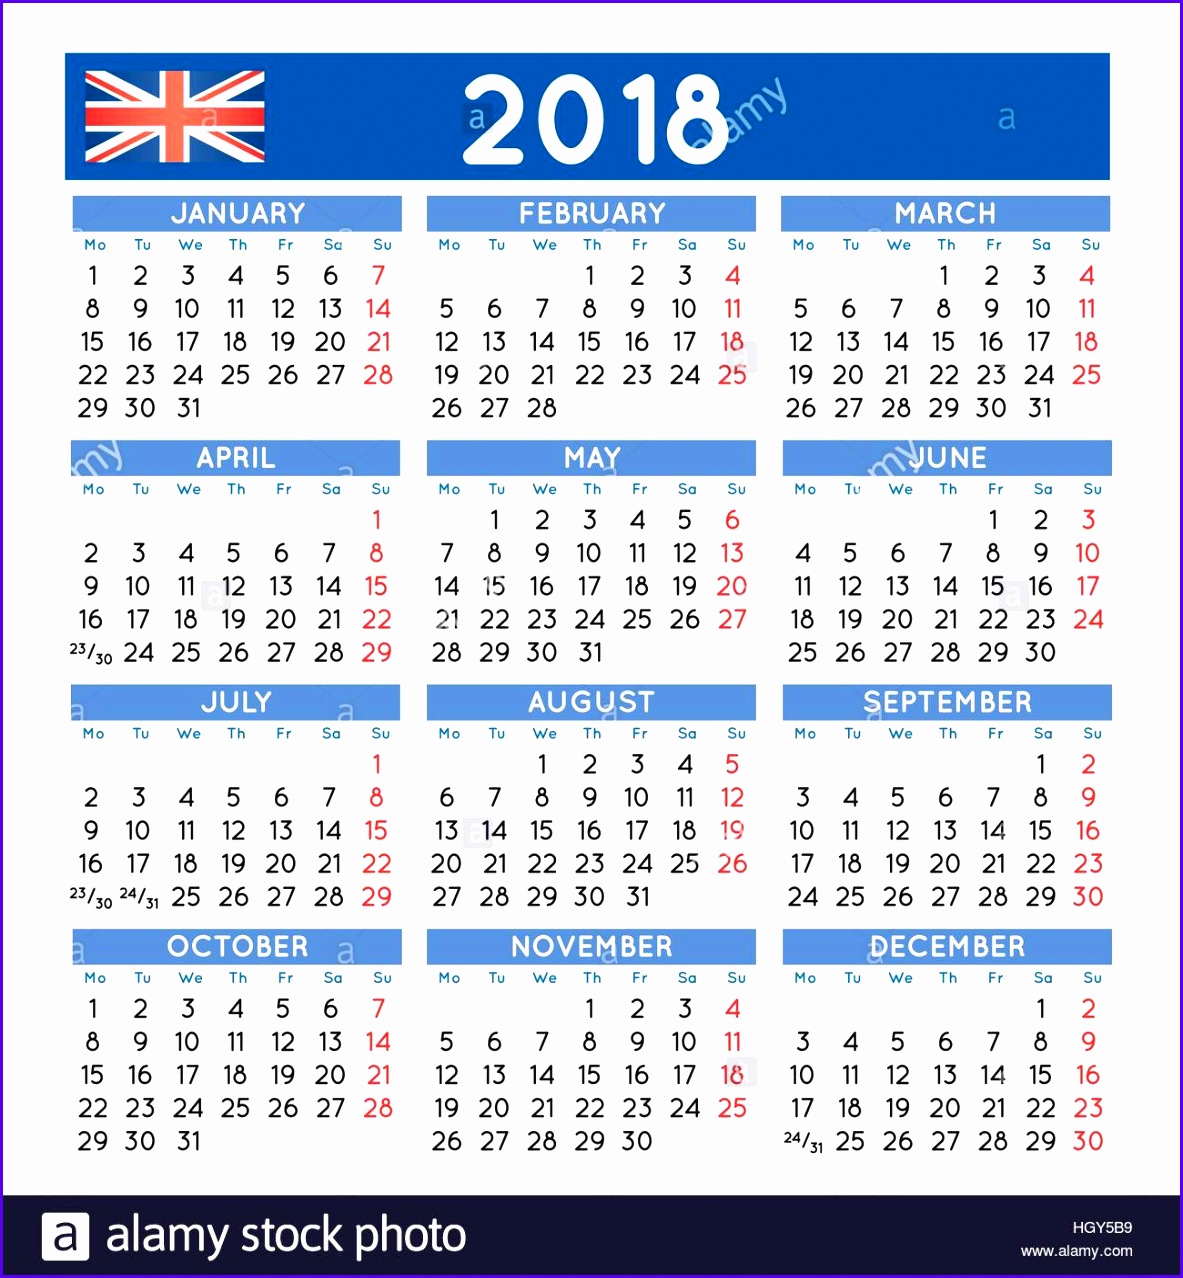 Yearly Calendar 2018 2018 Calendar PDF Monthly Calendar 2018 2017 and 2018 Calendar 11831278